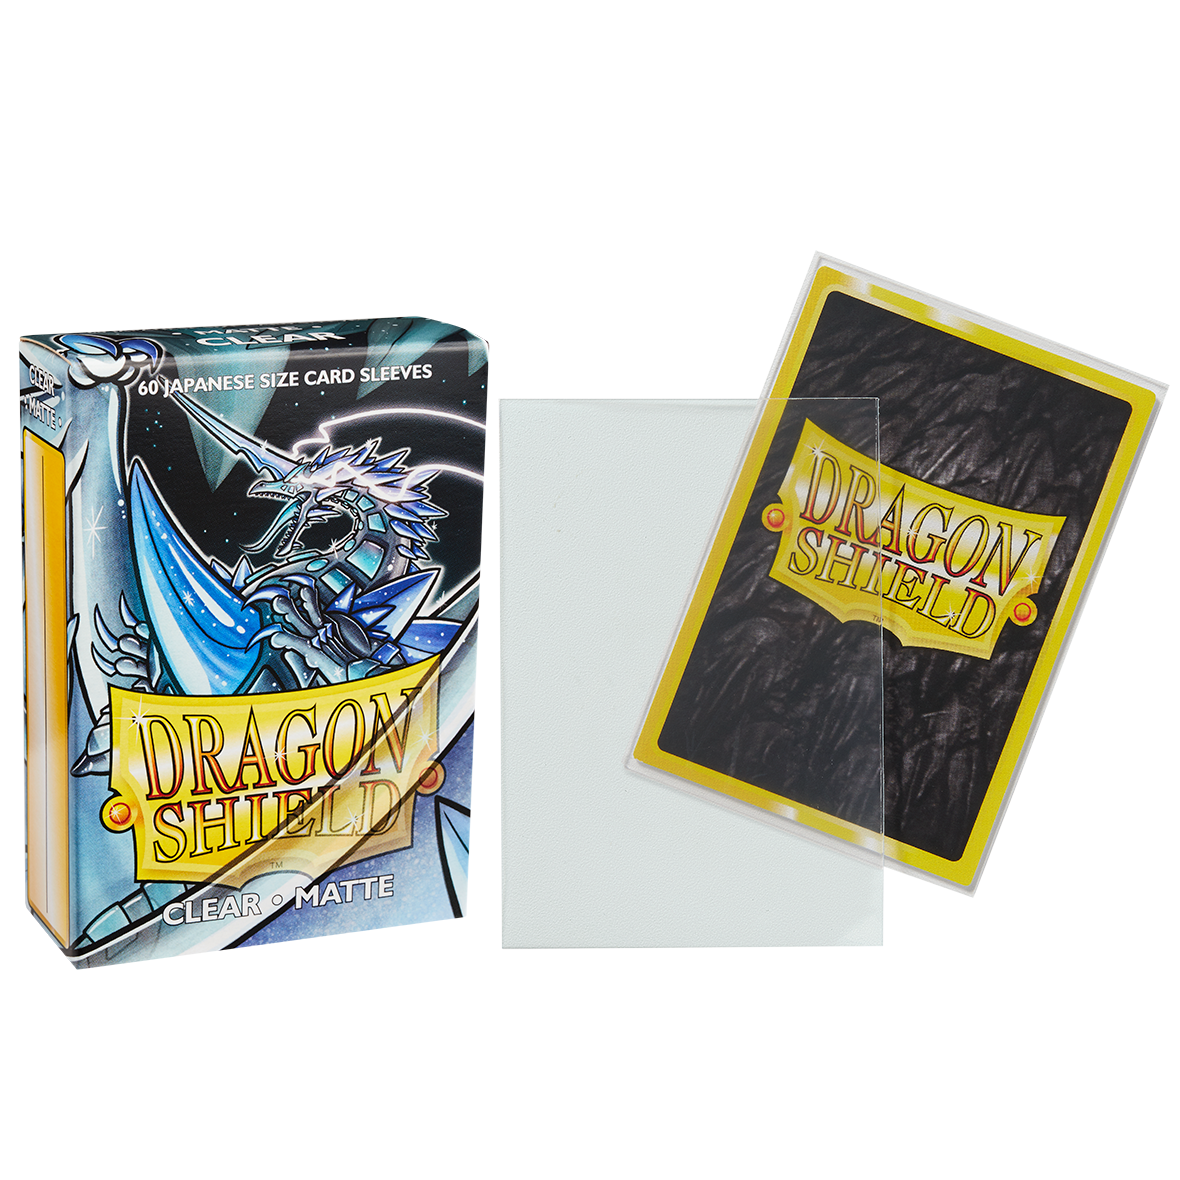 Dragon Shield Sleeve Matte Small Size 60pcs - Clear Matte (Japanese Size)-Dragon Shield-Ace Cards & Collectibles